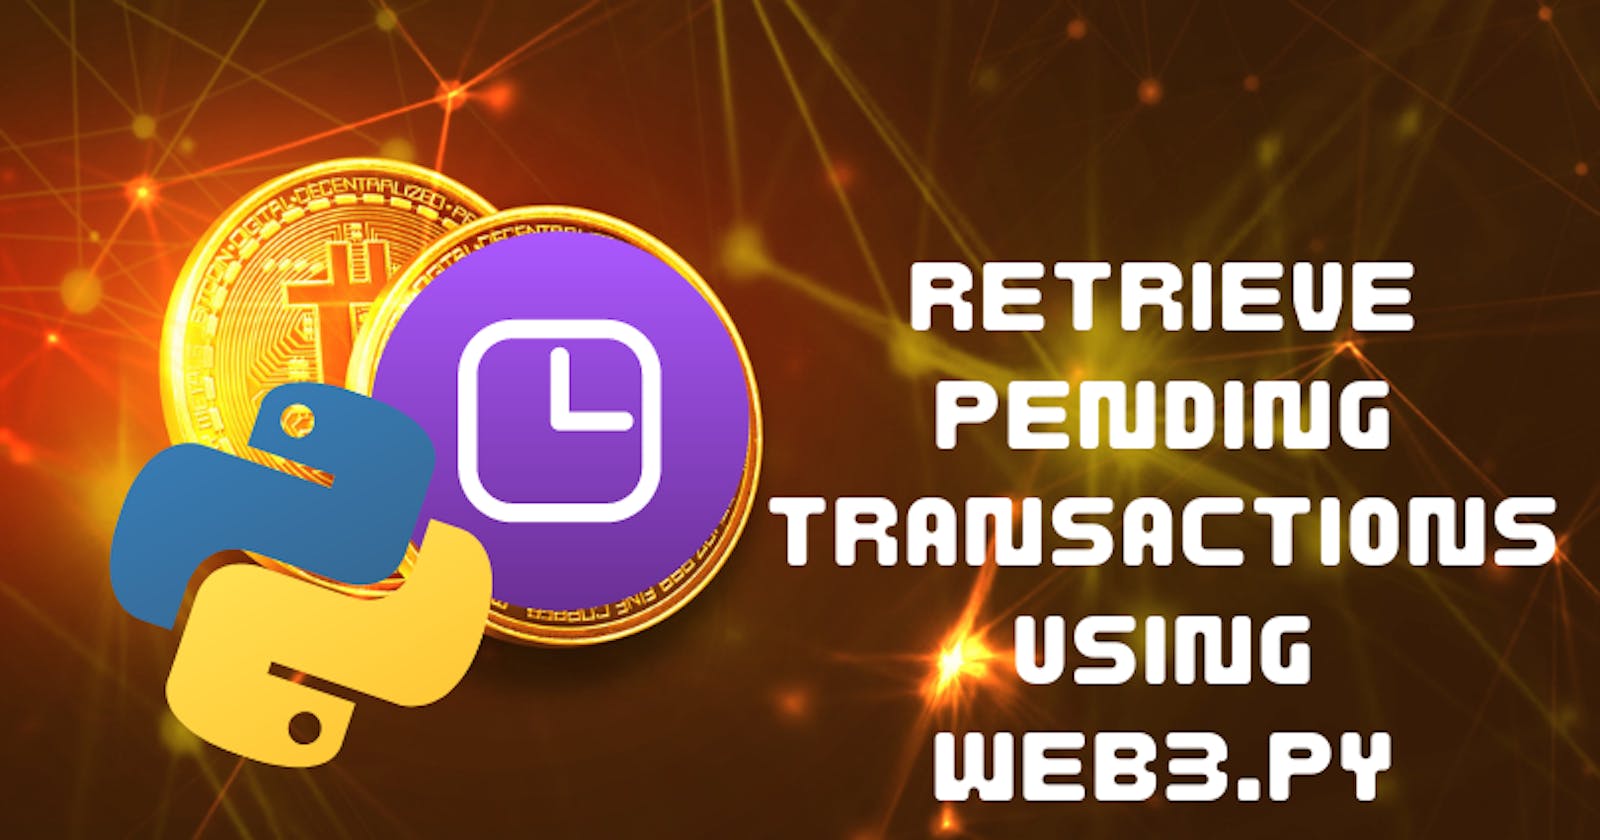 Retrieve and display pending transactions using Web3.py